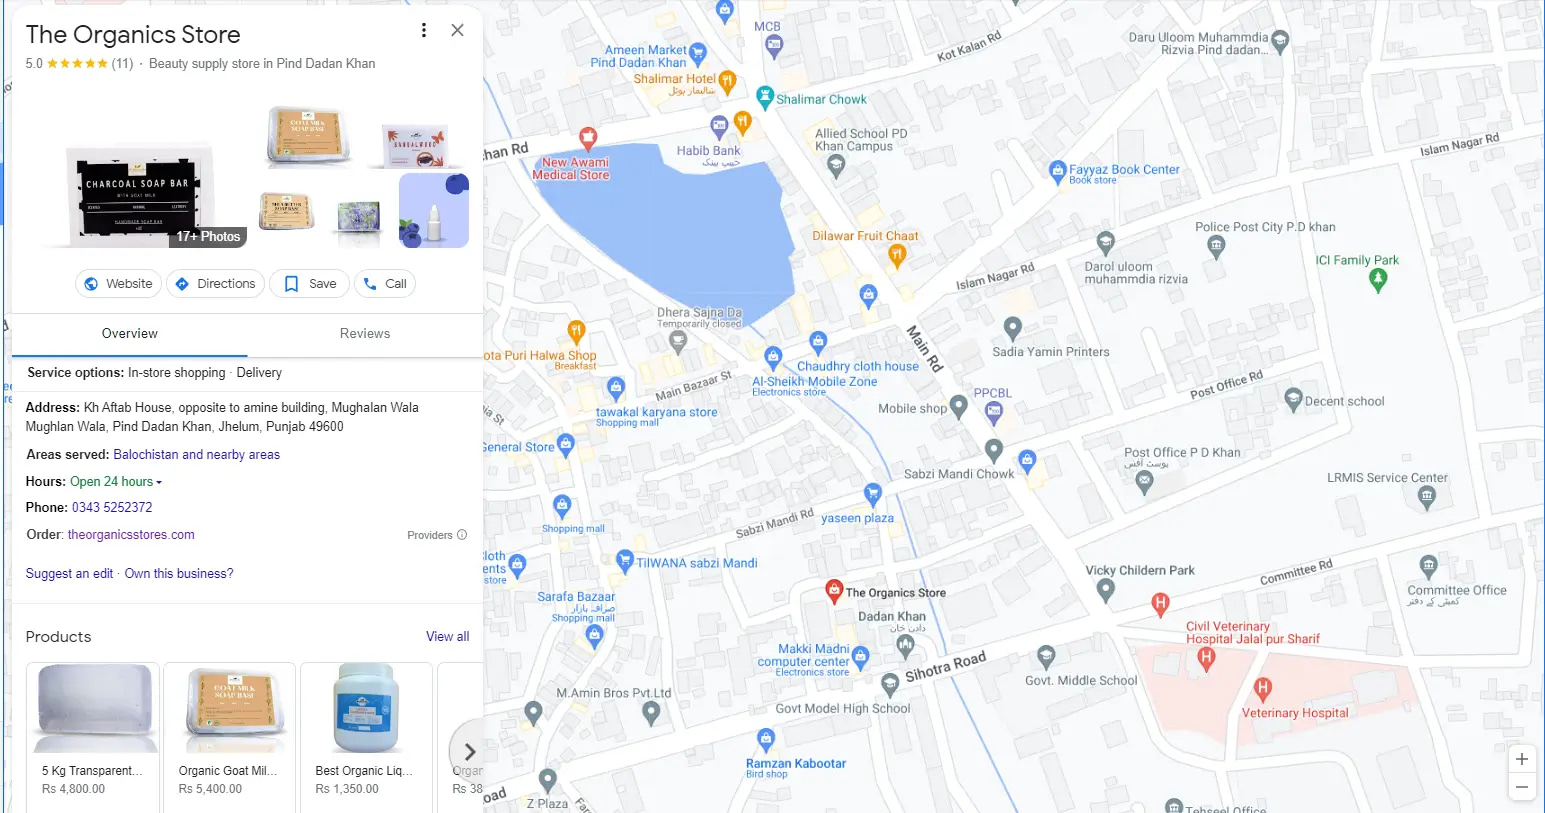 The Organics Store Google Map Website 1